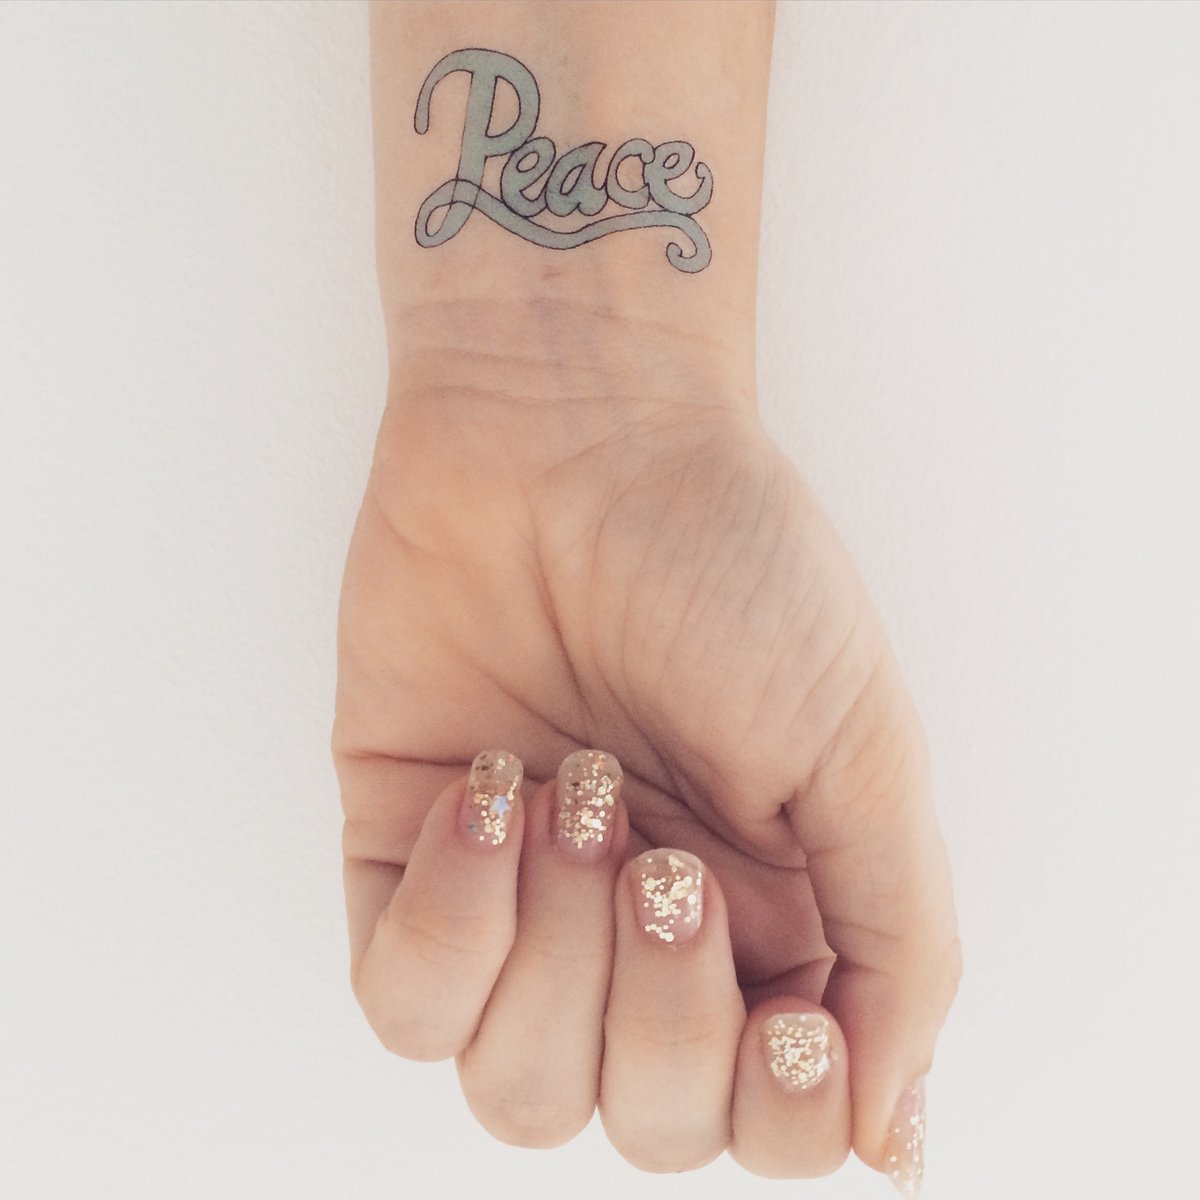 Peace and Love Tattoos